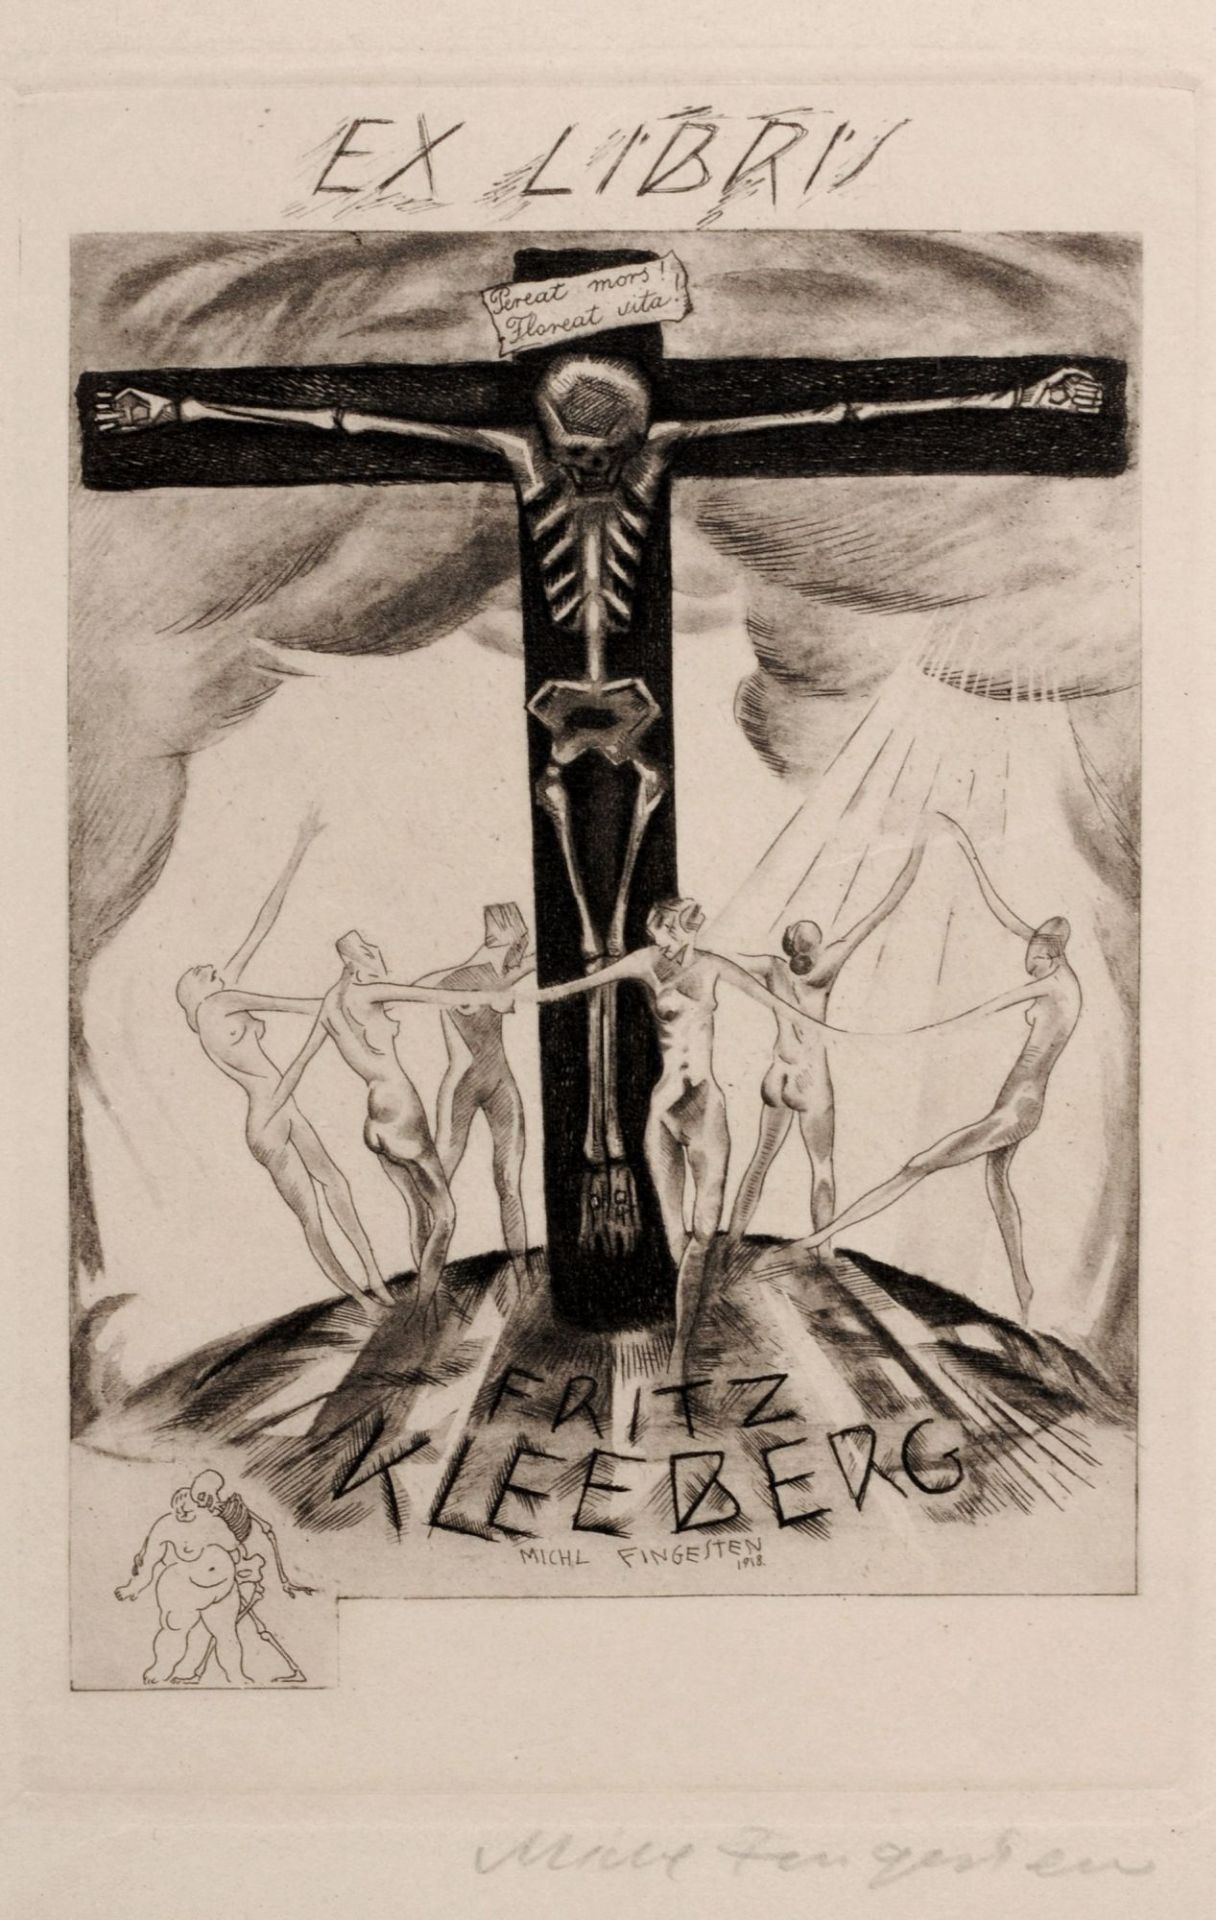 Michel Fingesten "Ex Libris Fritz Kleeberg". 1918.